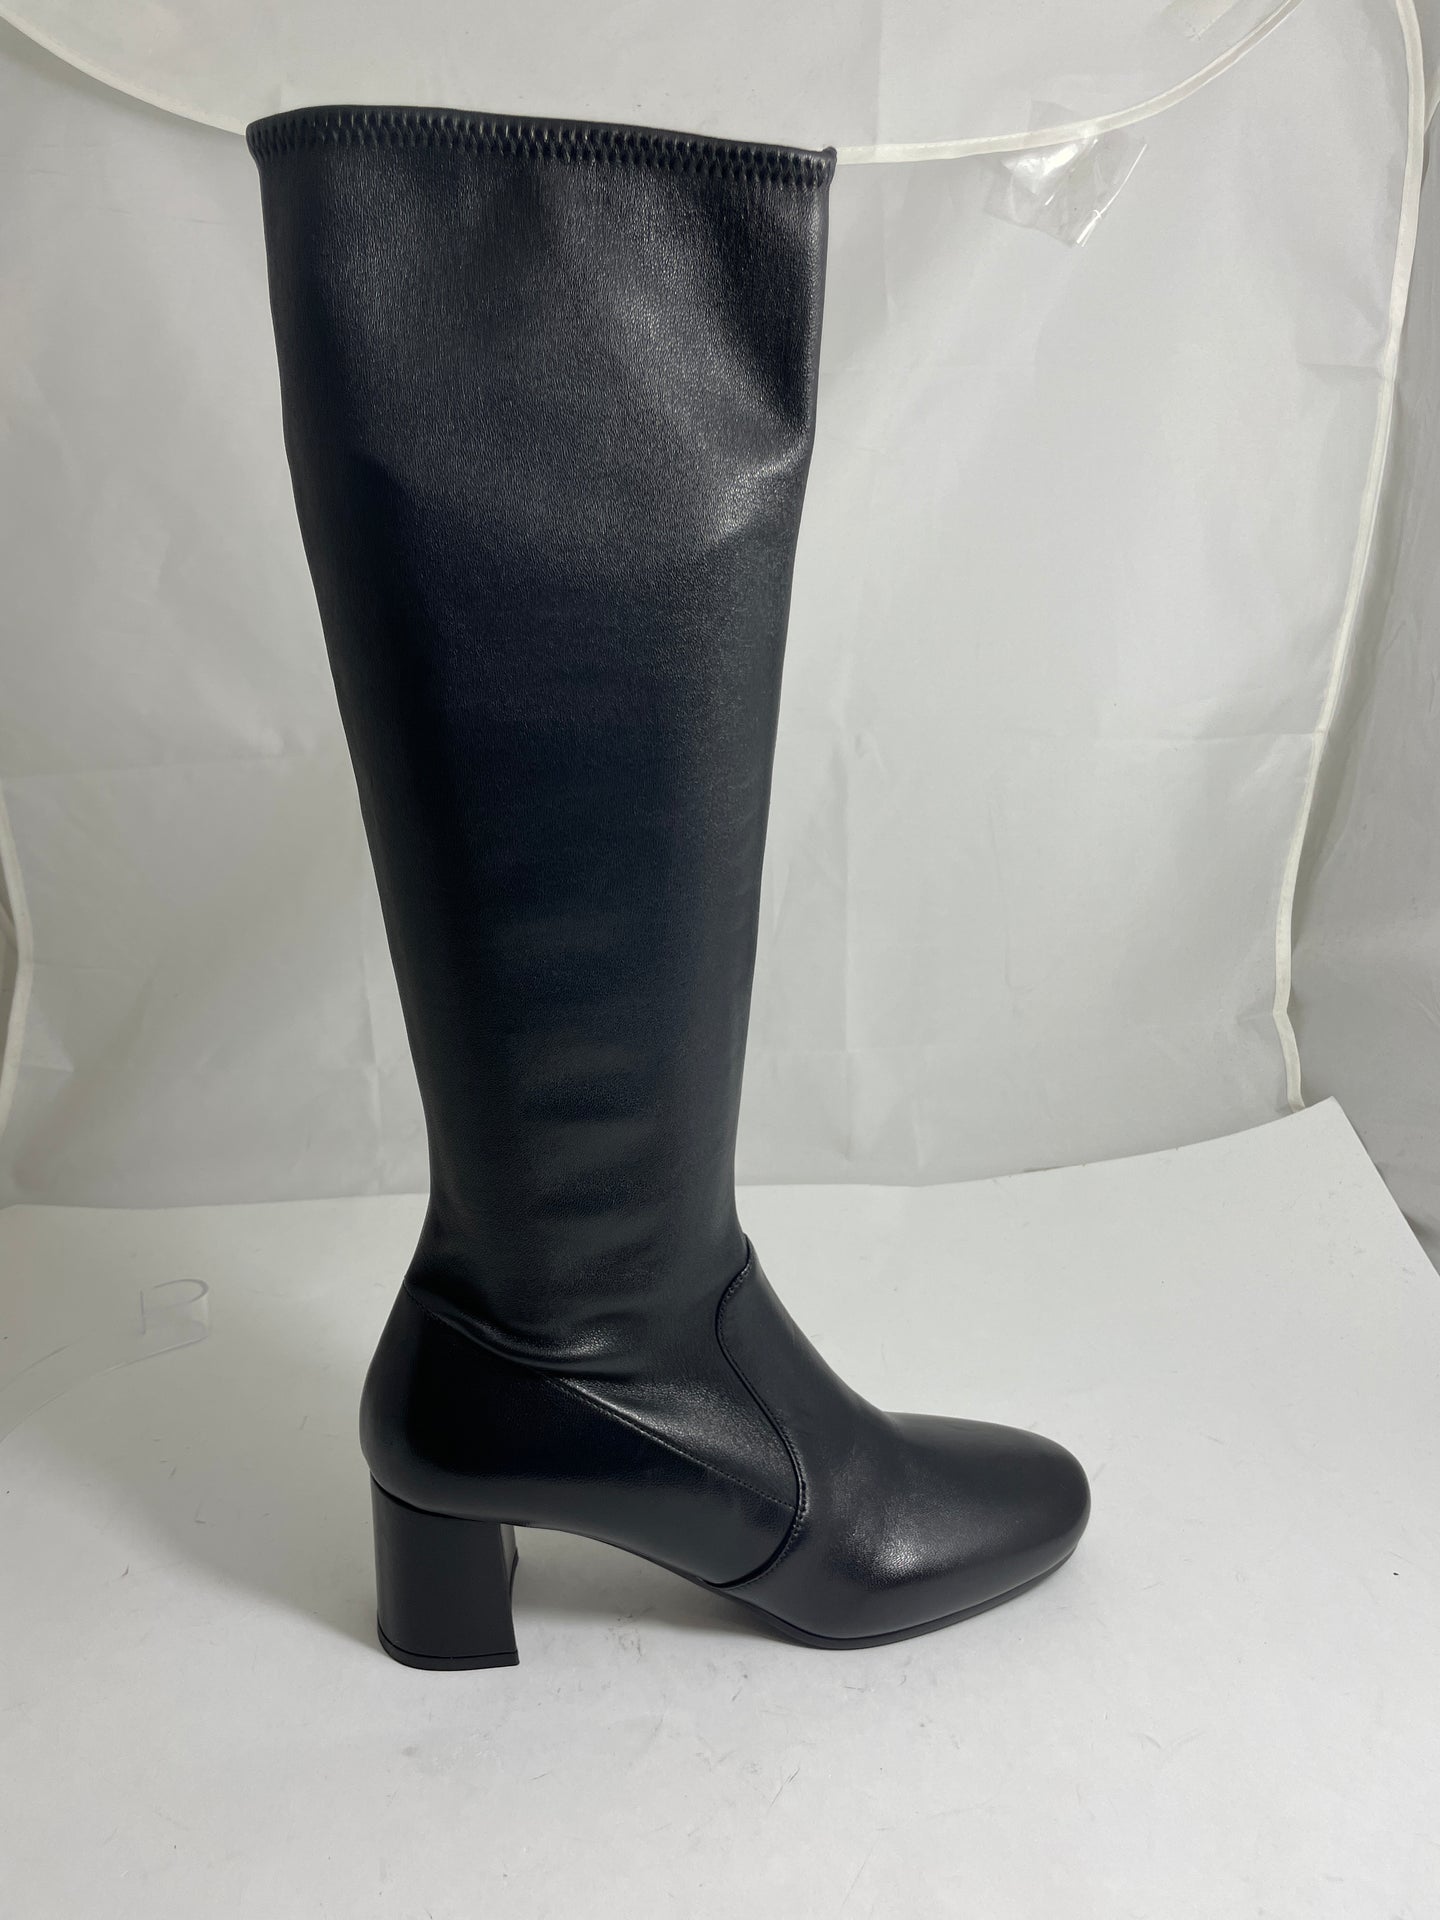 Prada Black Leather Tall Boots